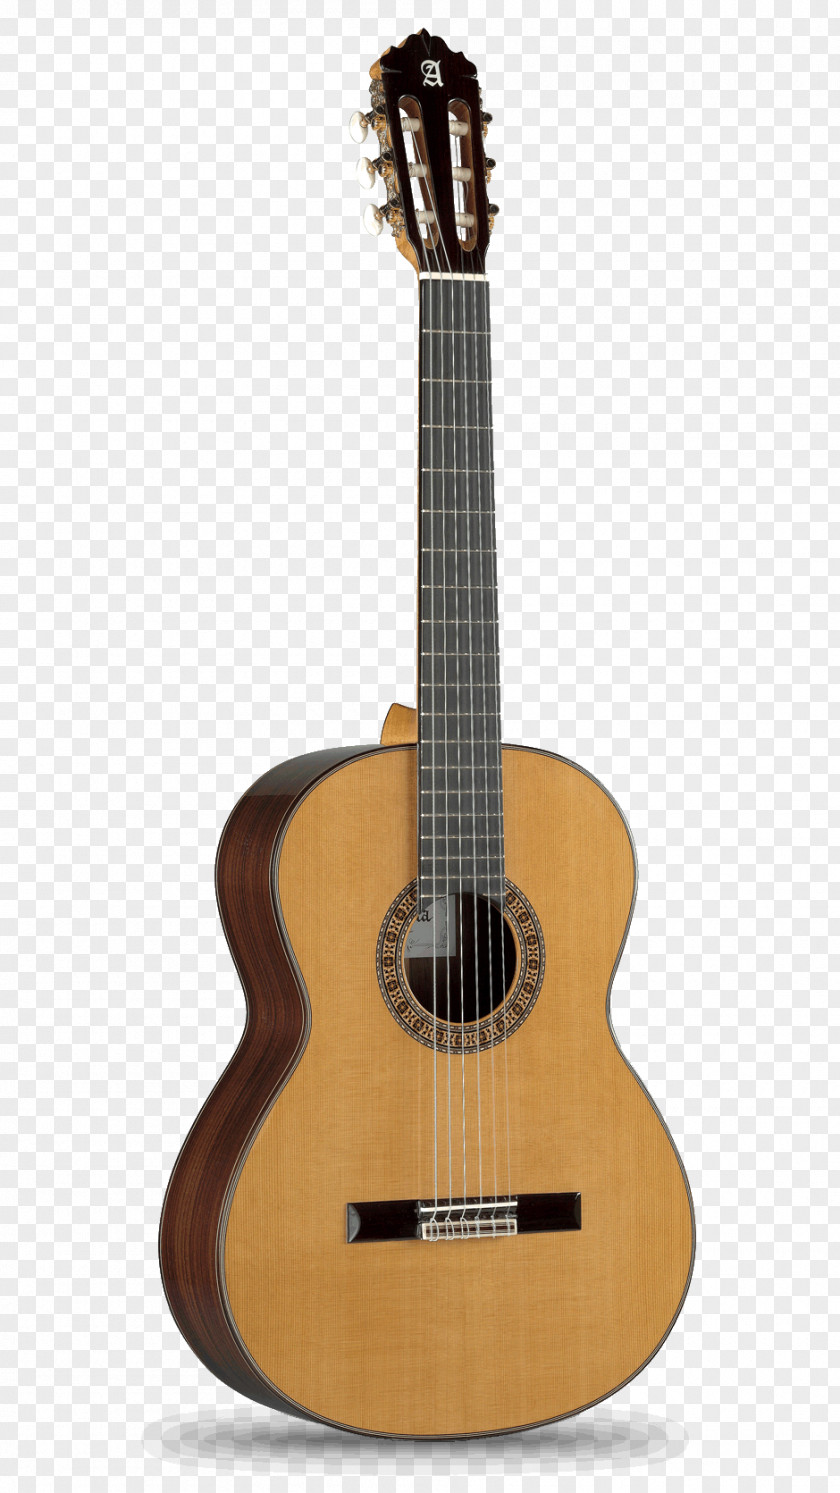 Cedar Wood Grain Alhambra Classical Guitar Cutaway Acoustic PNG